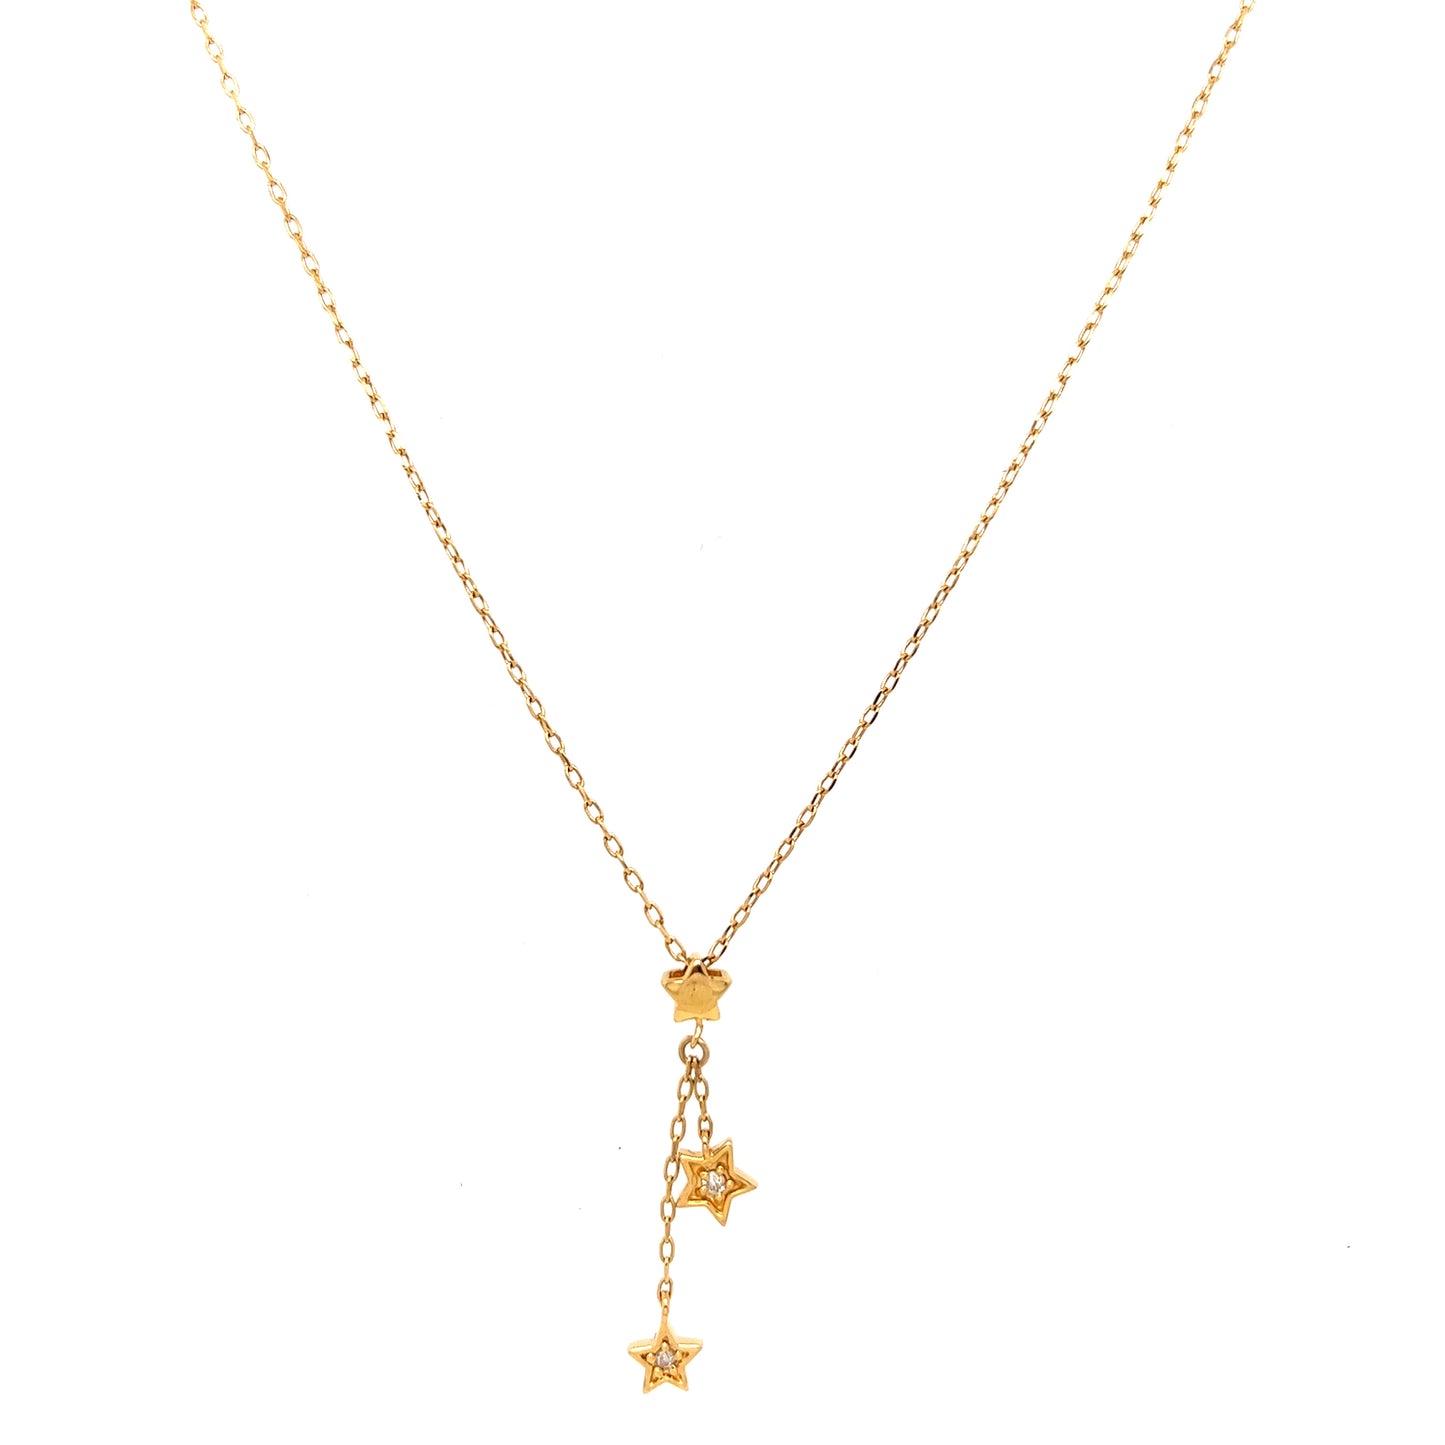 Tiny gold Star necklace